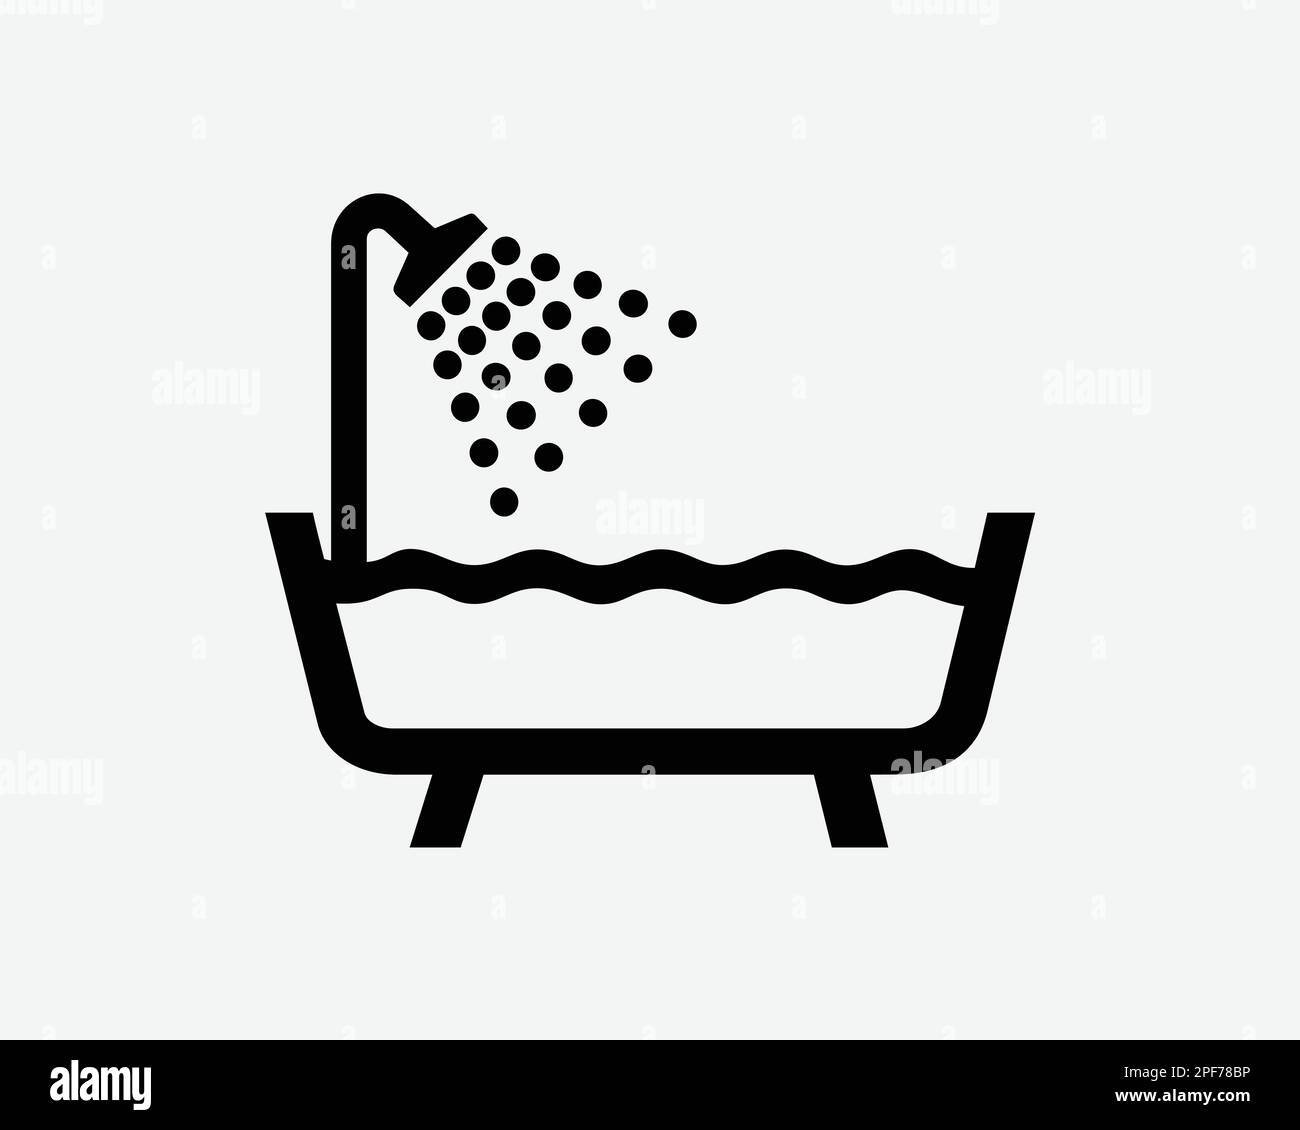 Bathtub Shower Bathroom Bath Tub Room Water Faucet Toilet Icon Black White Silhouette Symbol Sign Graphic Clipart Artwork Illustration Pictogram Vecto Stock Vector